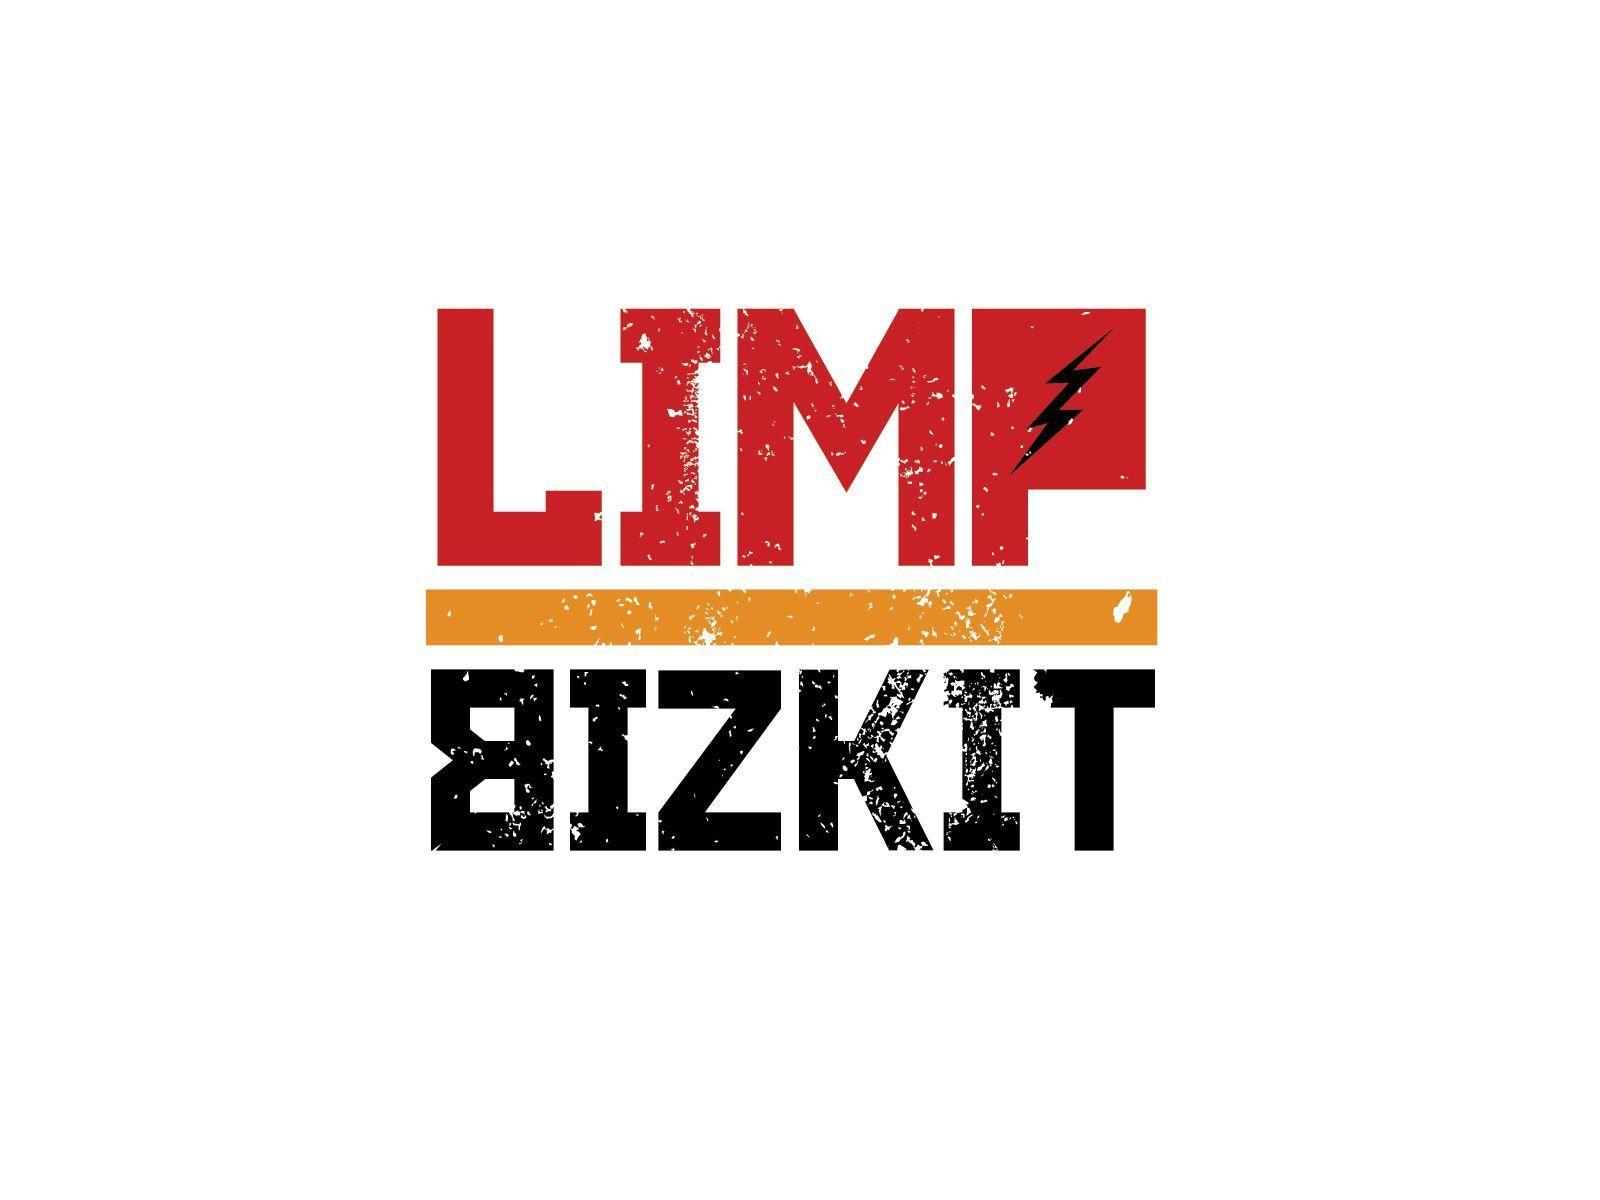 Limp Bizkit. Band logos band logos, metal bands logos